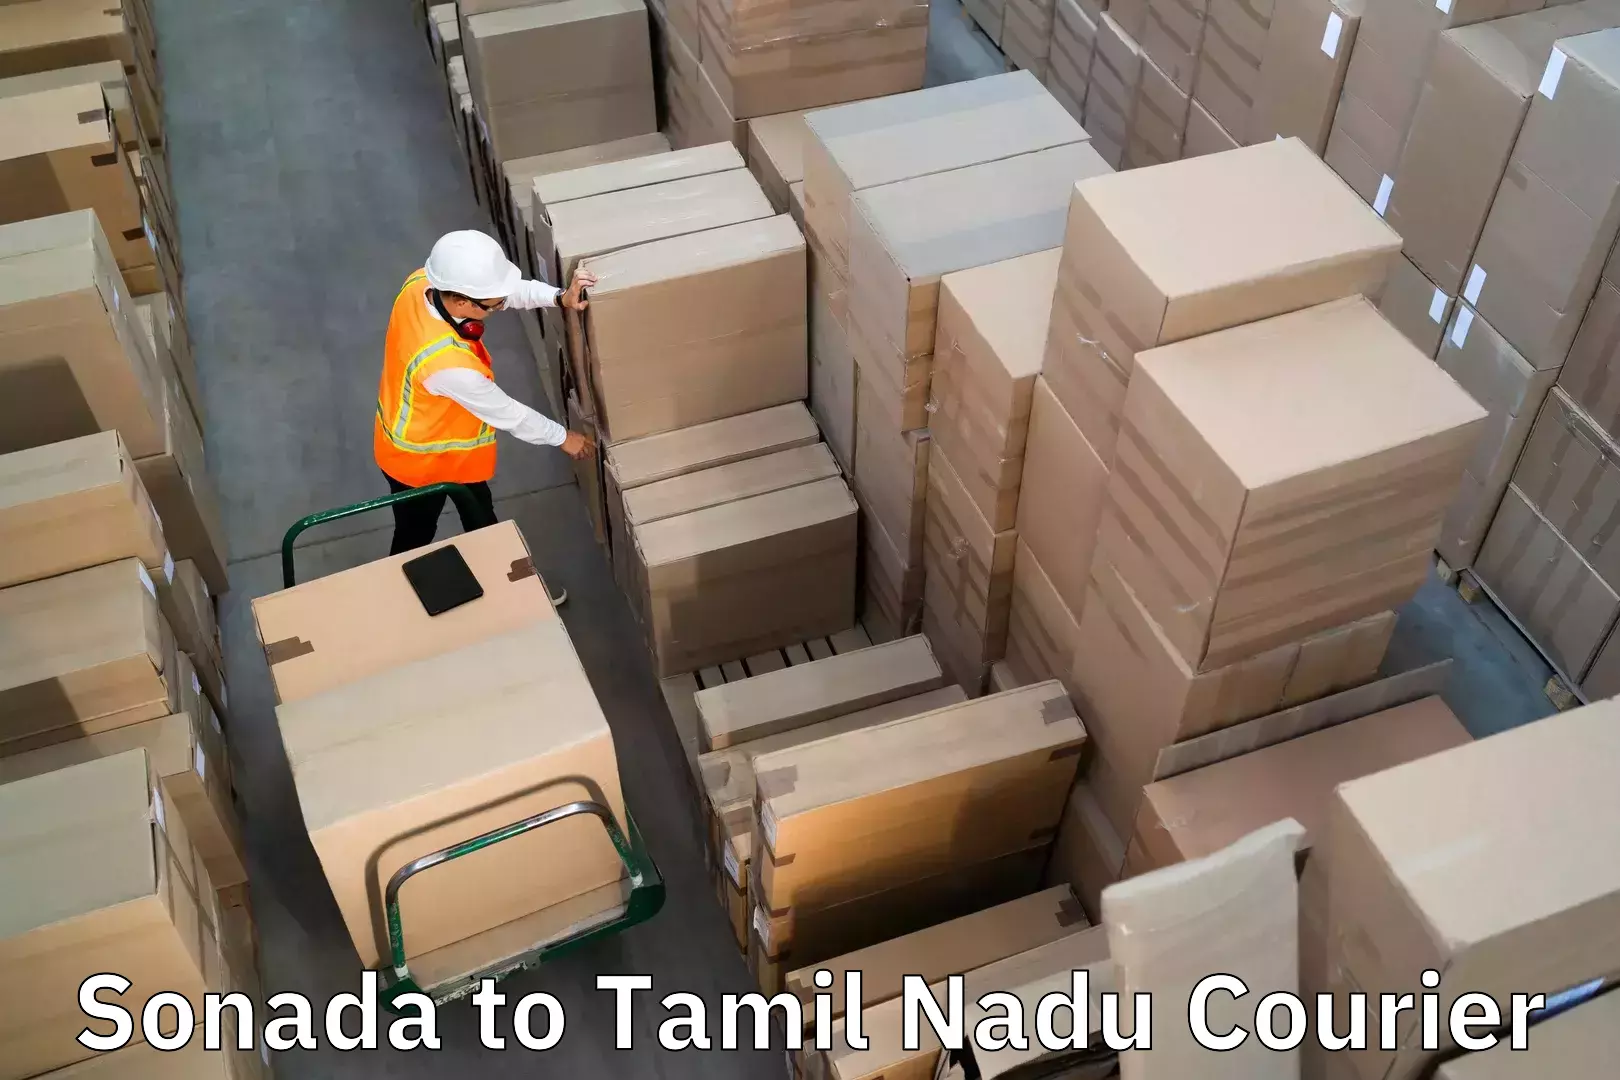 Luggage shipment tracking Sonada to Periyakulam